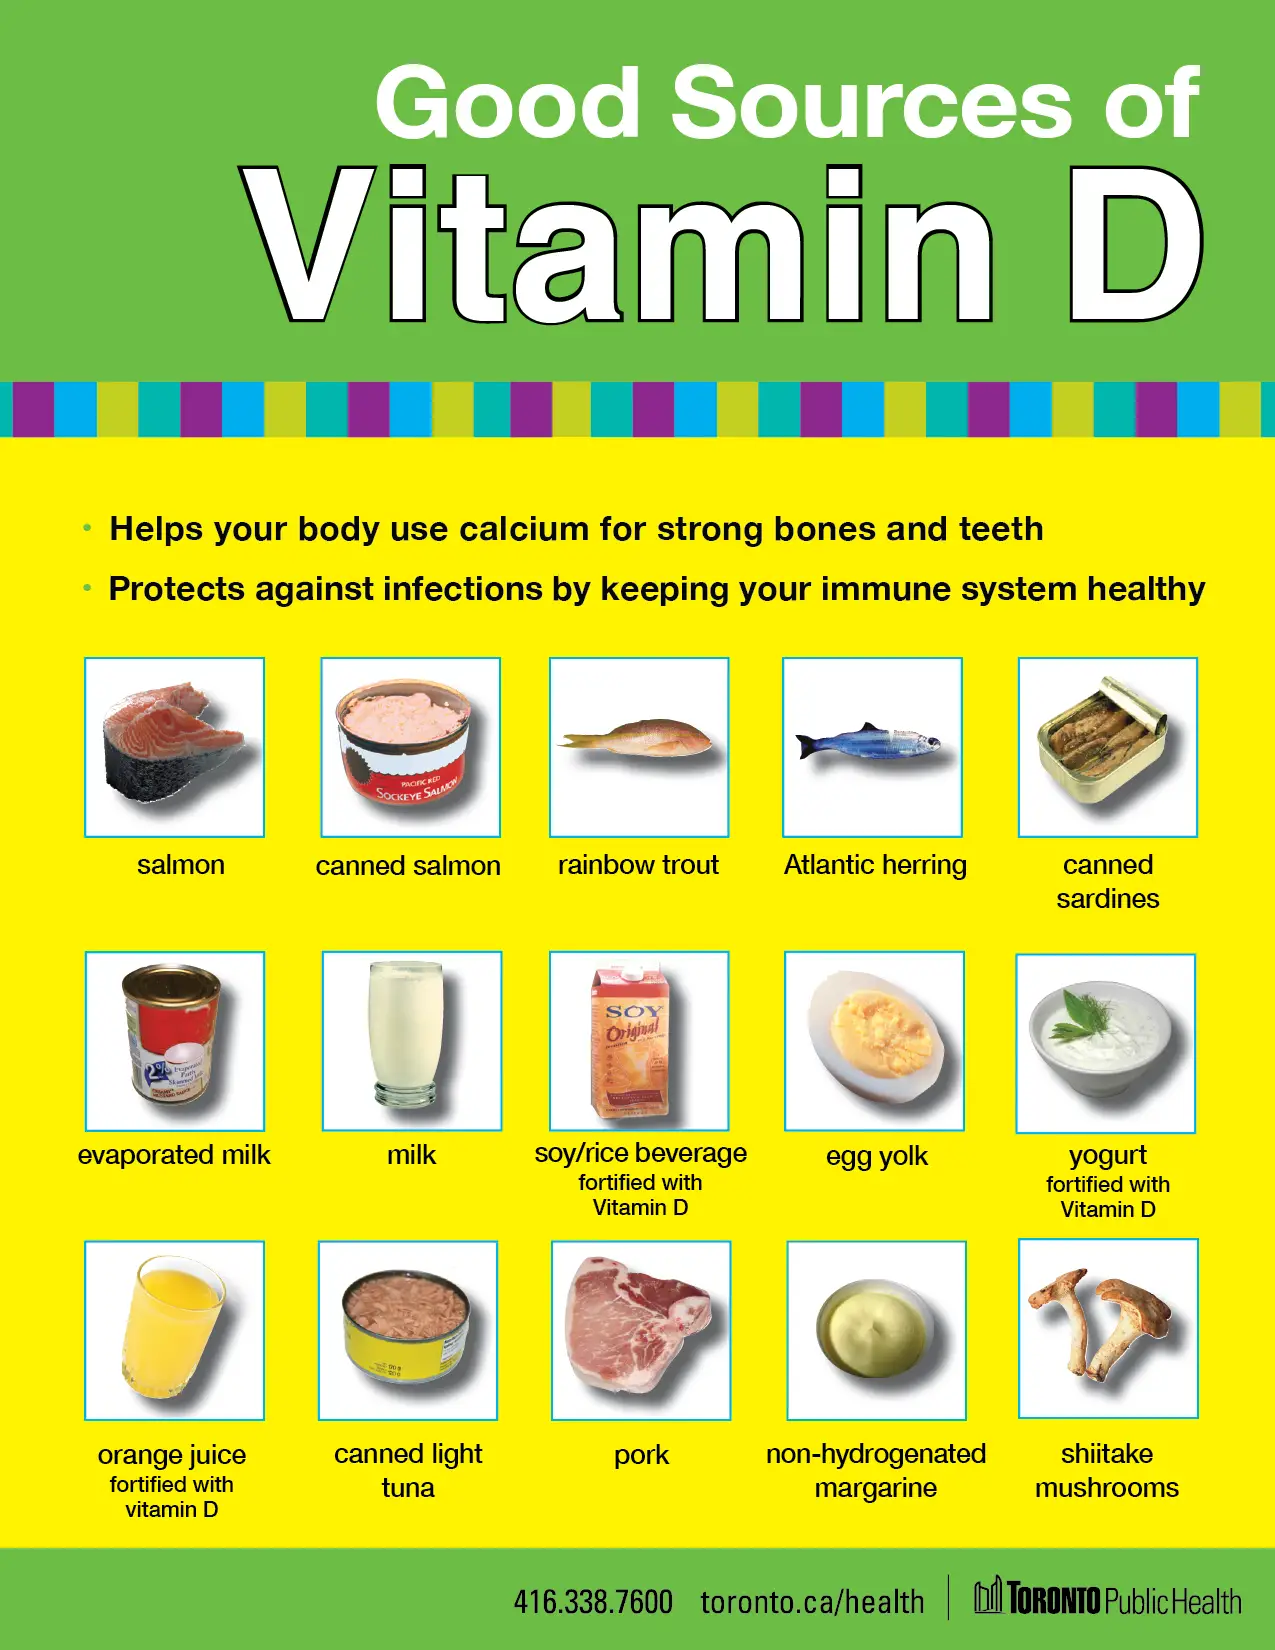 Good sources of Vitamin D